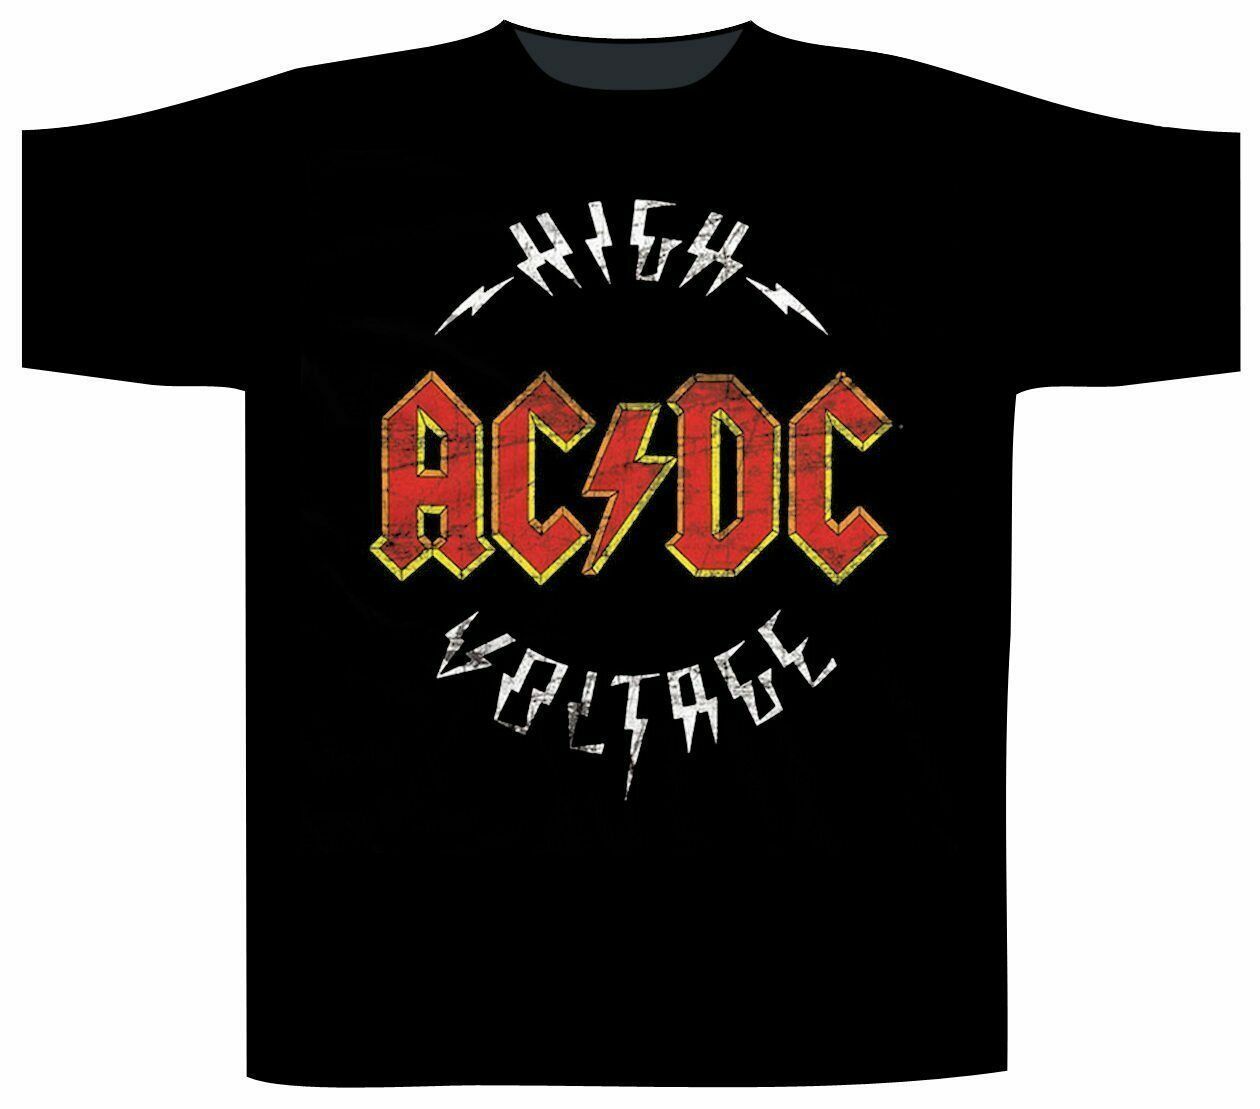 Dc volts. AC/DC "High Voltage". AC DC Хай Вольтаж. AC DC High Voltage 1975. AC DC High Voltage альбом.